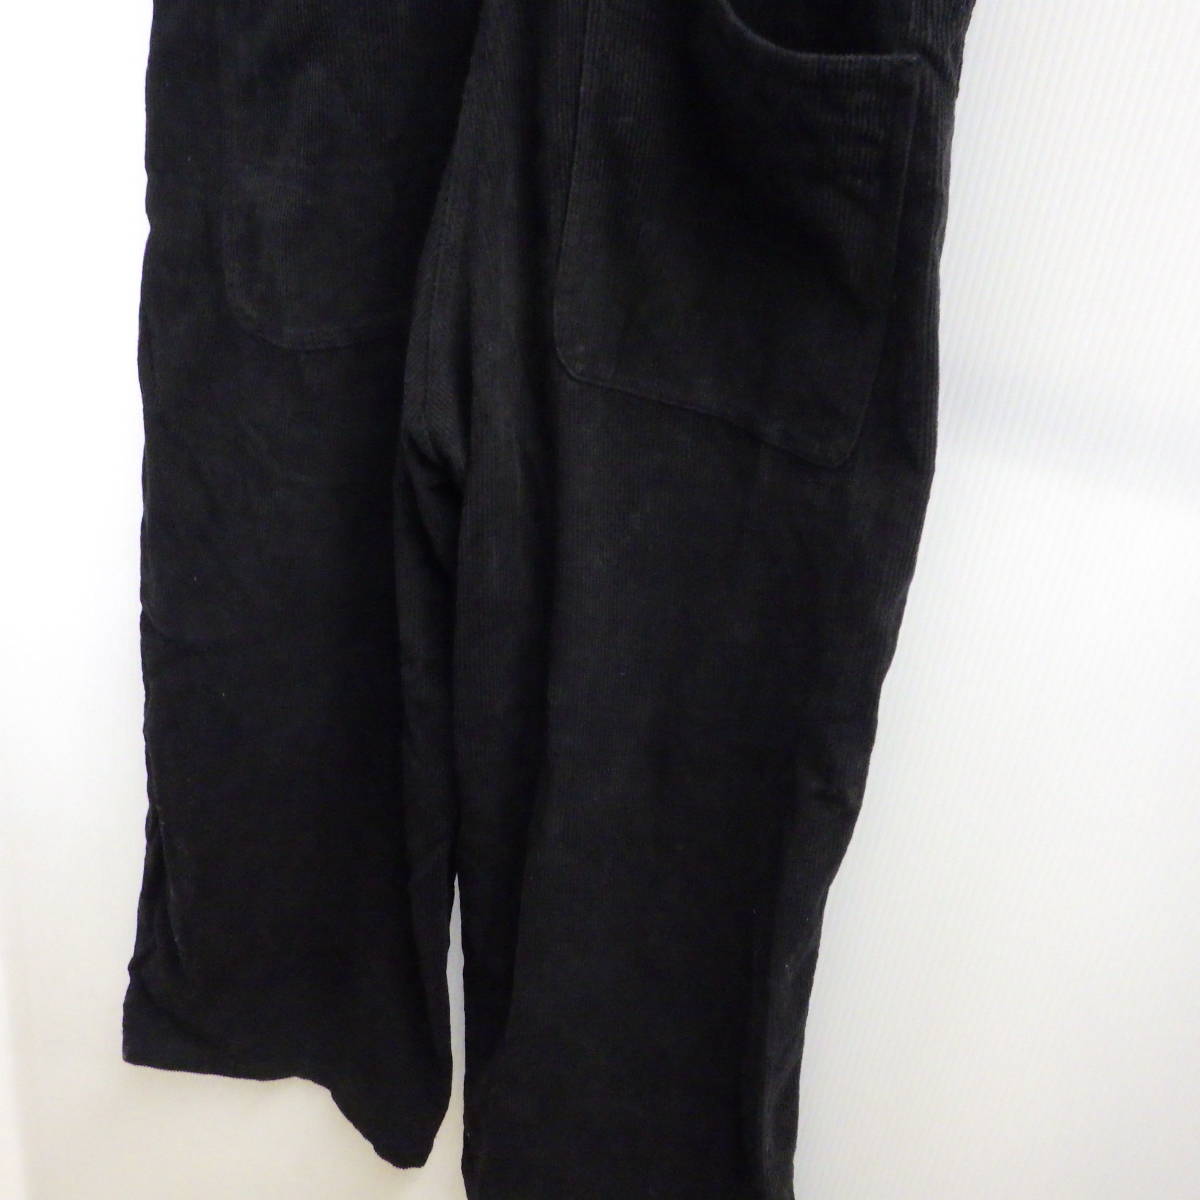  Milkfed overall overall corduroy pants XS size black 